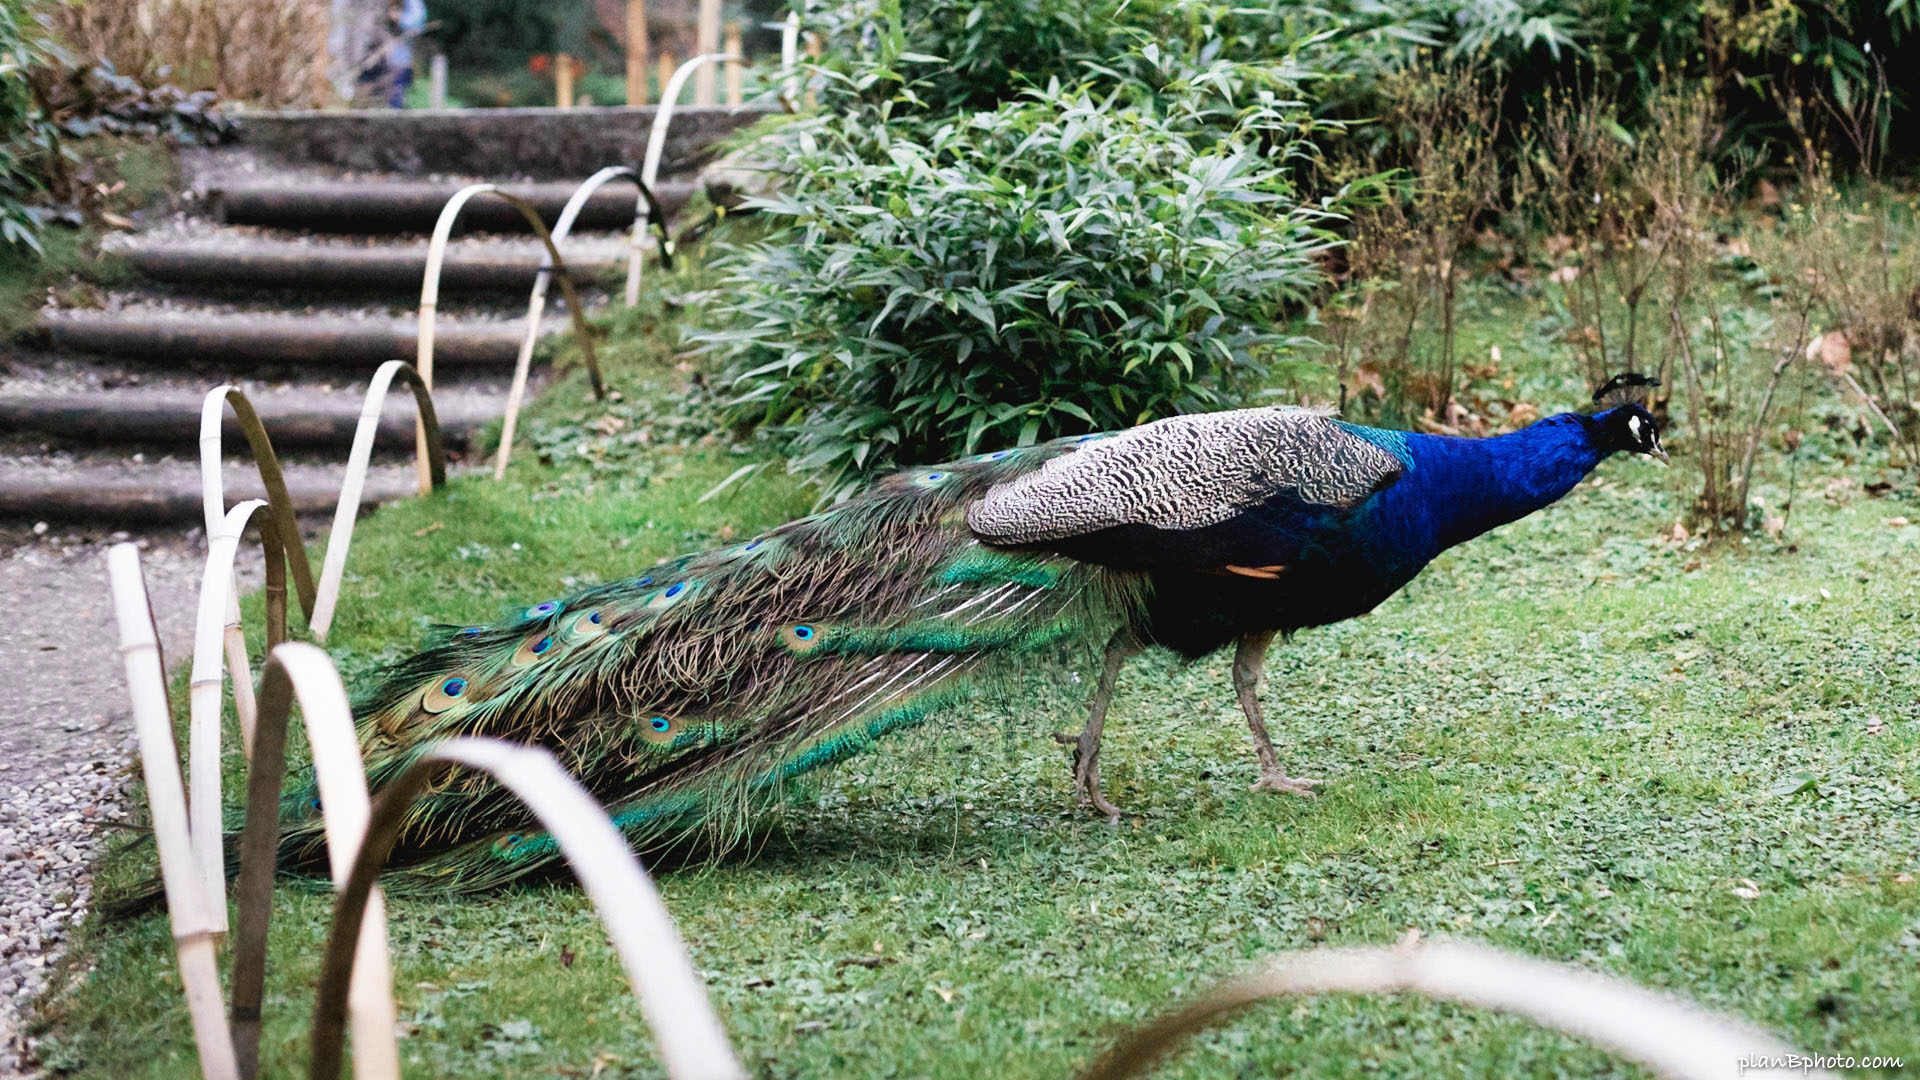 Peacock walking at Kyoto Garden, Holland Park, London